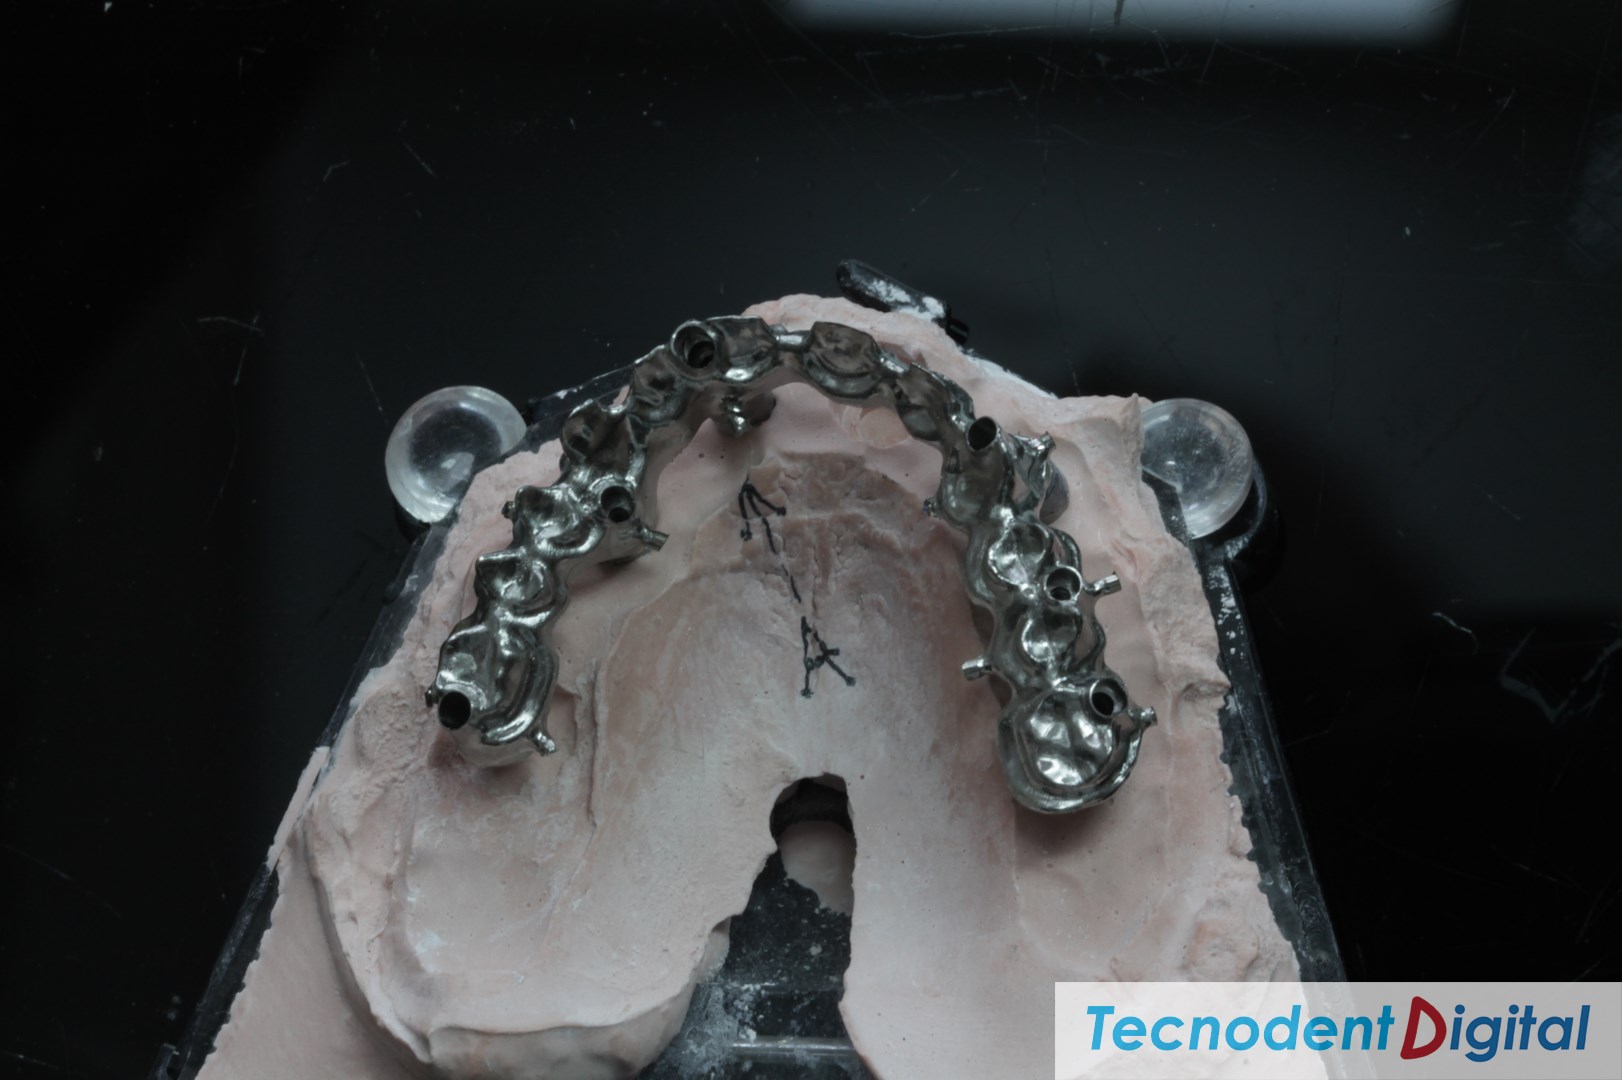 Estructura de Titanio canal angulado TecnodentDigital Laboratorio Dental Gandia Centro de Fresado Centro de Diseño